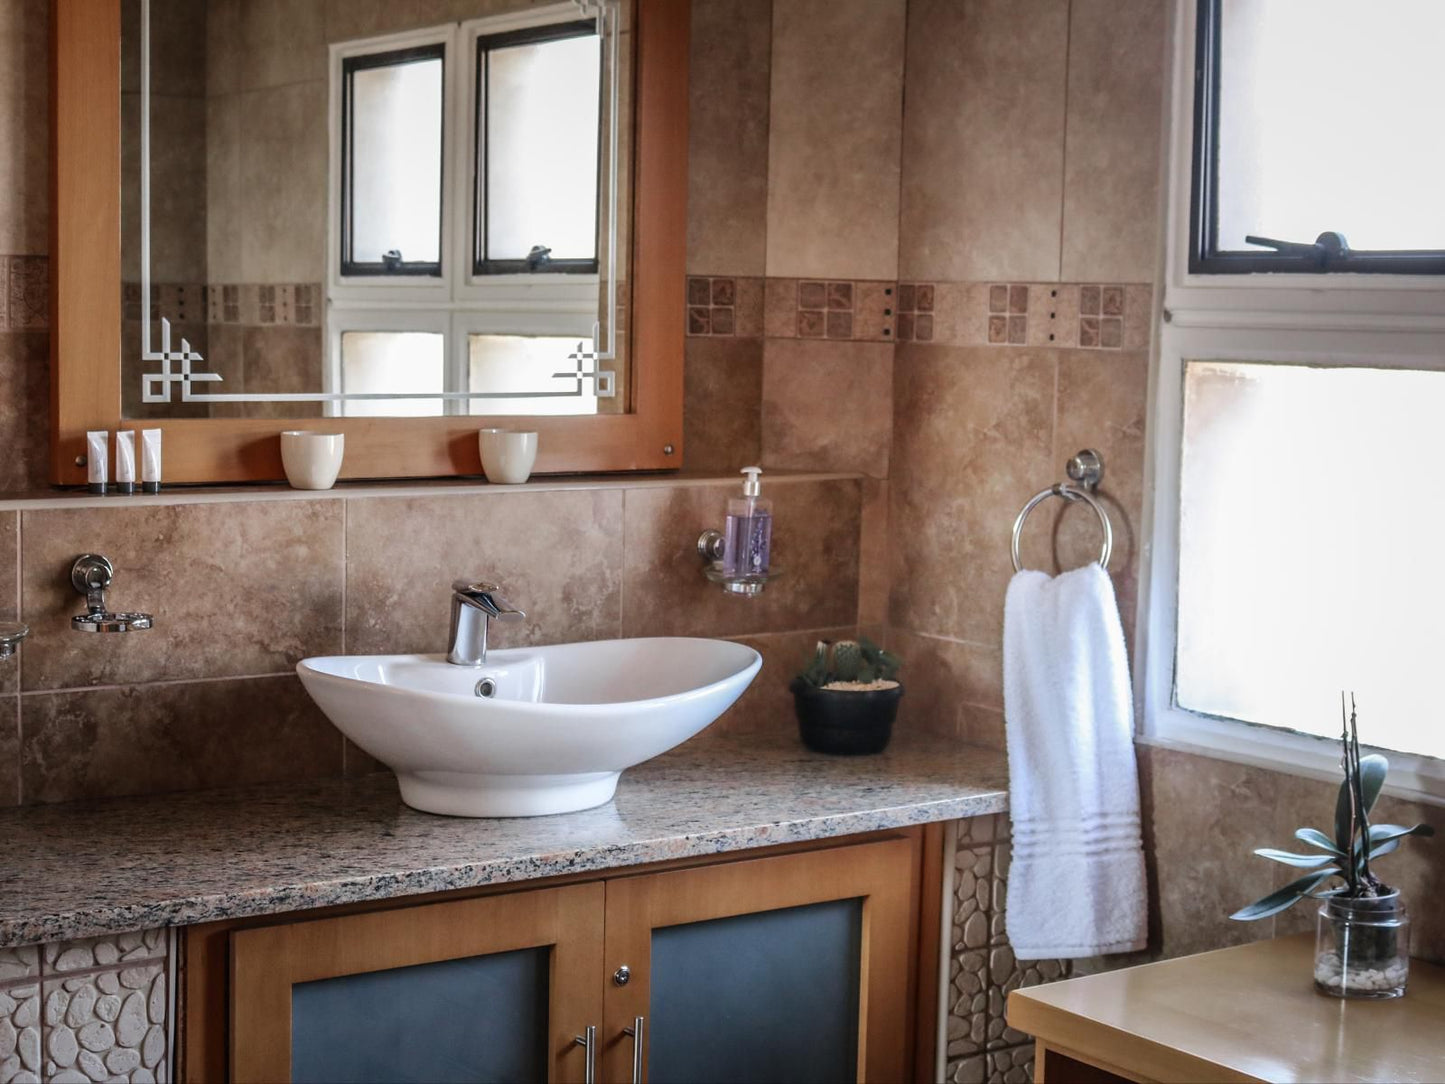 View On 3Rd Erasmia Centurion Gauteng South Africa Bathroom